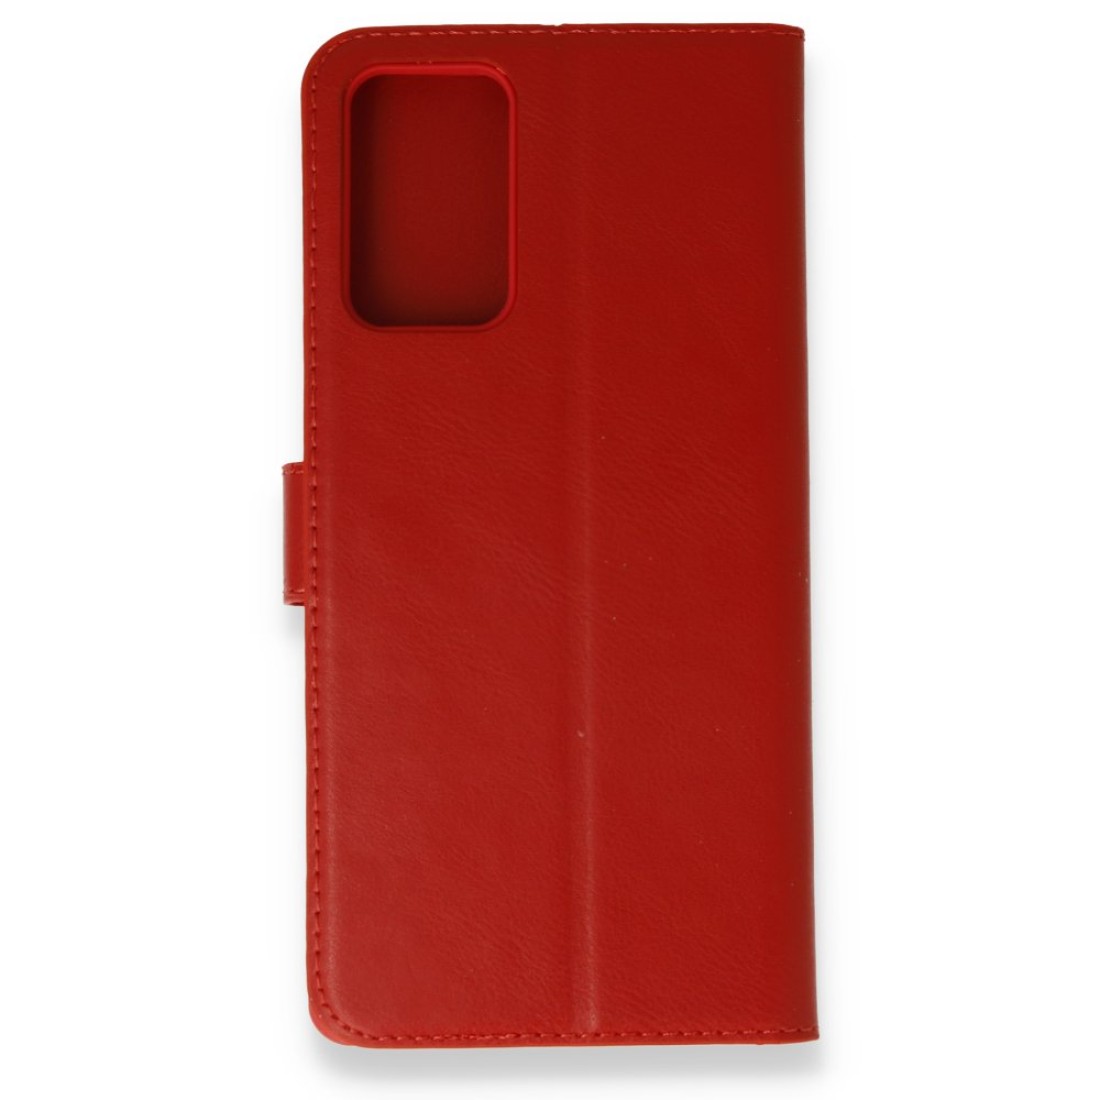 Samsung Galaxy Note 20 Kılıf Trend S Plus Kapaklı Kılıf - Kırmızı